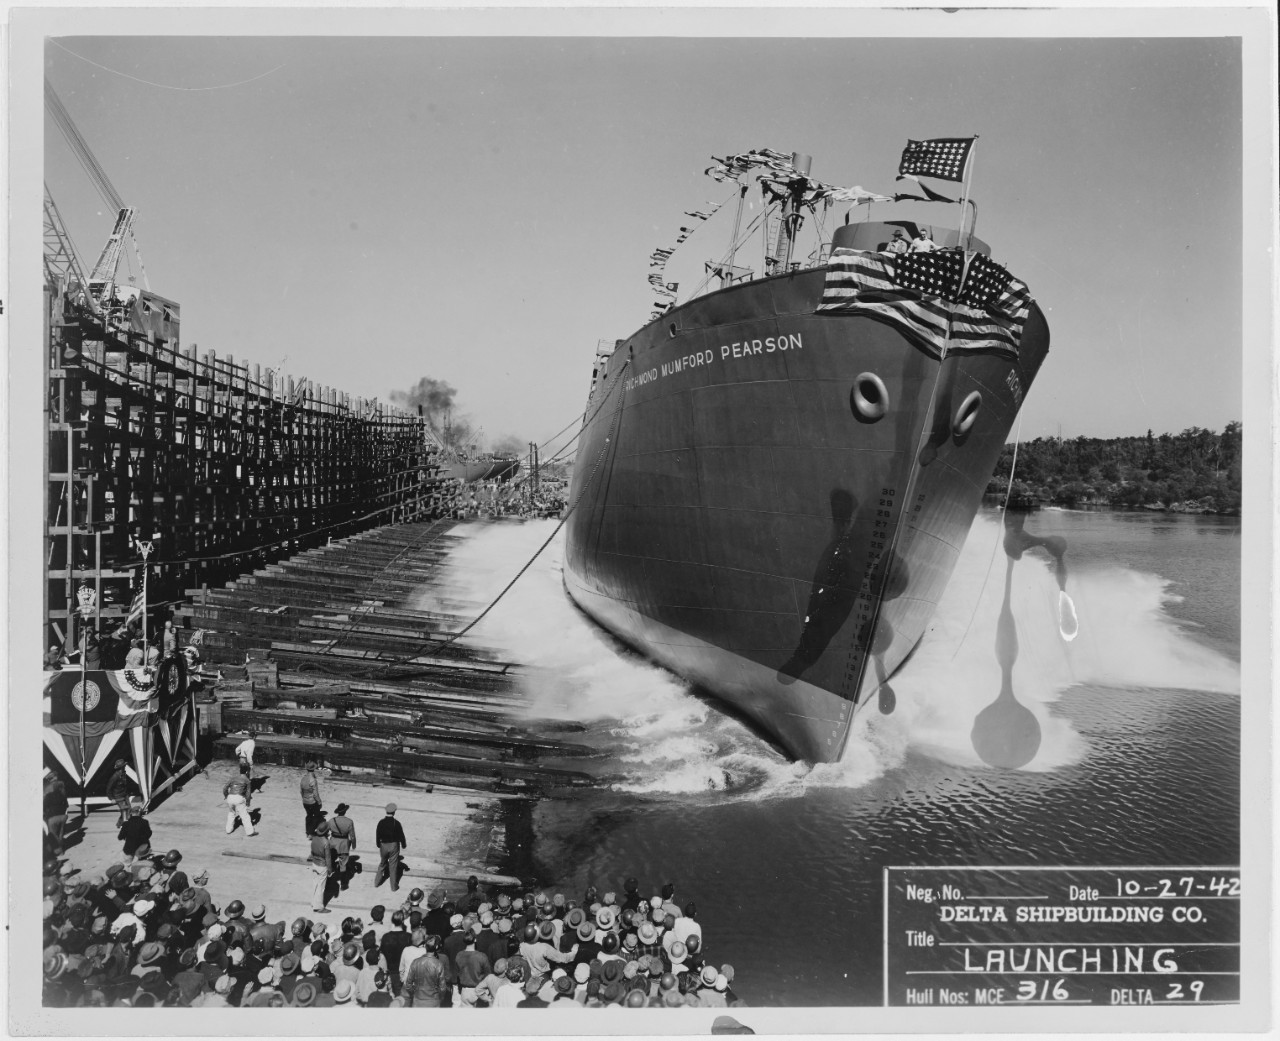 "Liberty" ship RICHMOND MUMFORD PEARSON